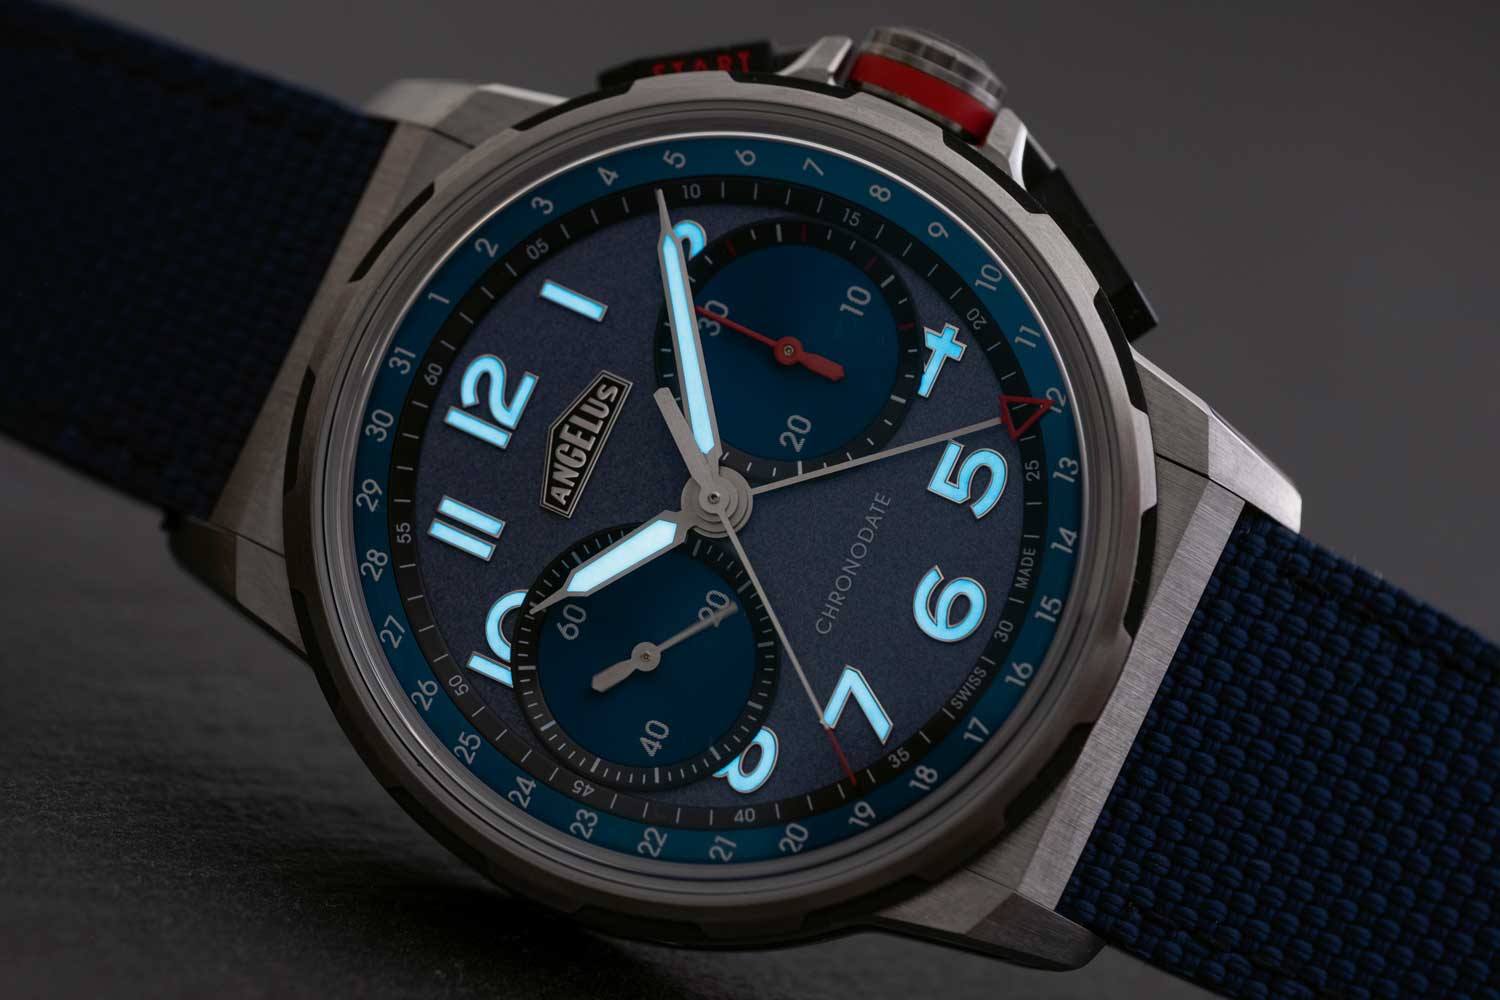 Blue Super-LumiNova illuminates the watch face